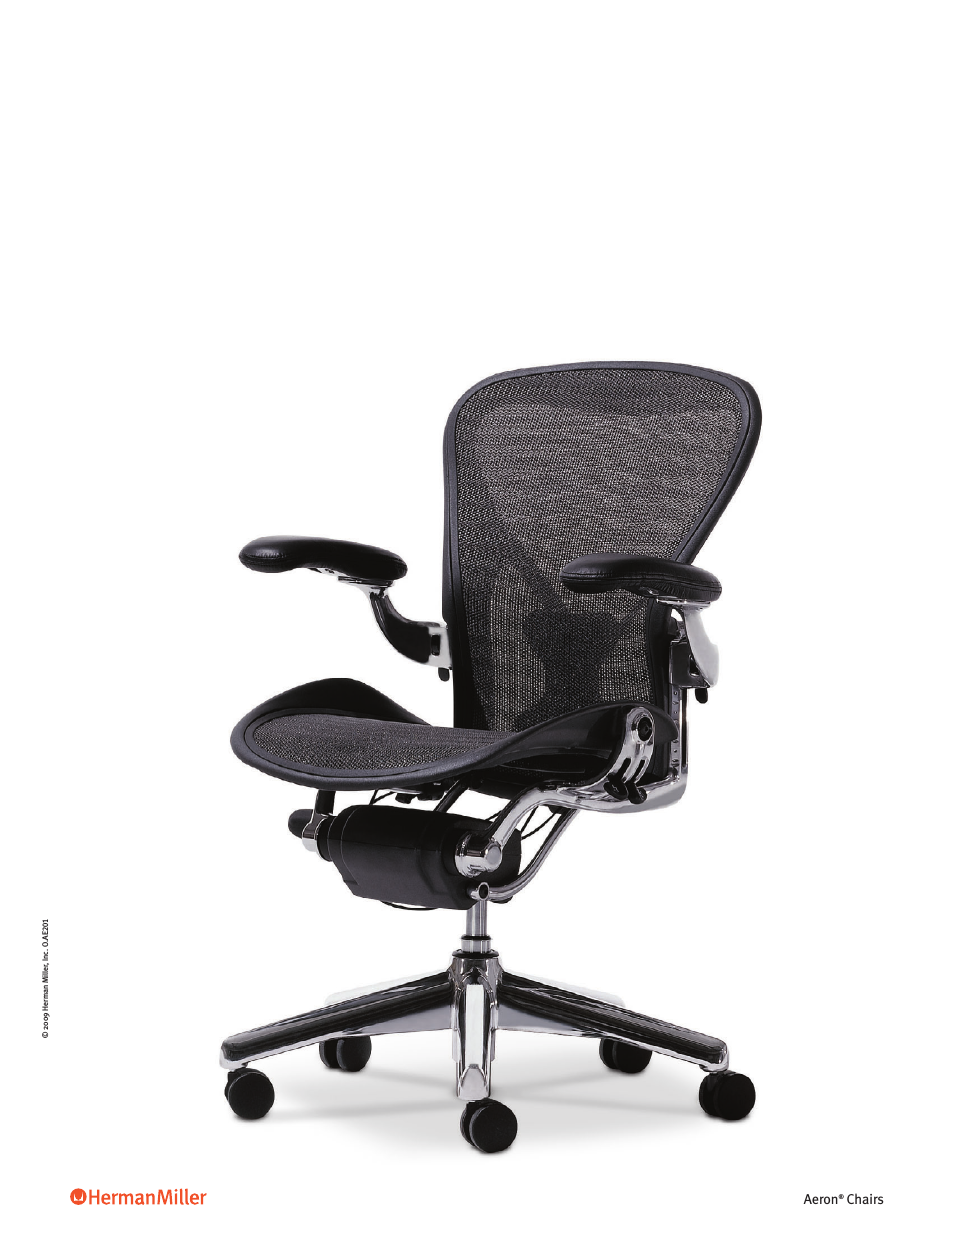 Aeron Side Chair - Brochure